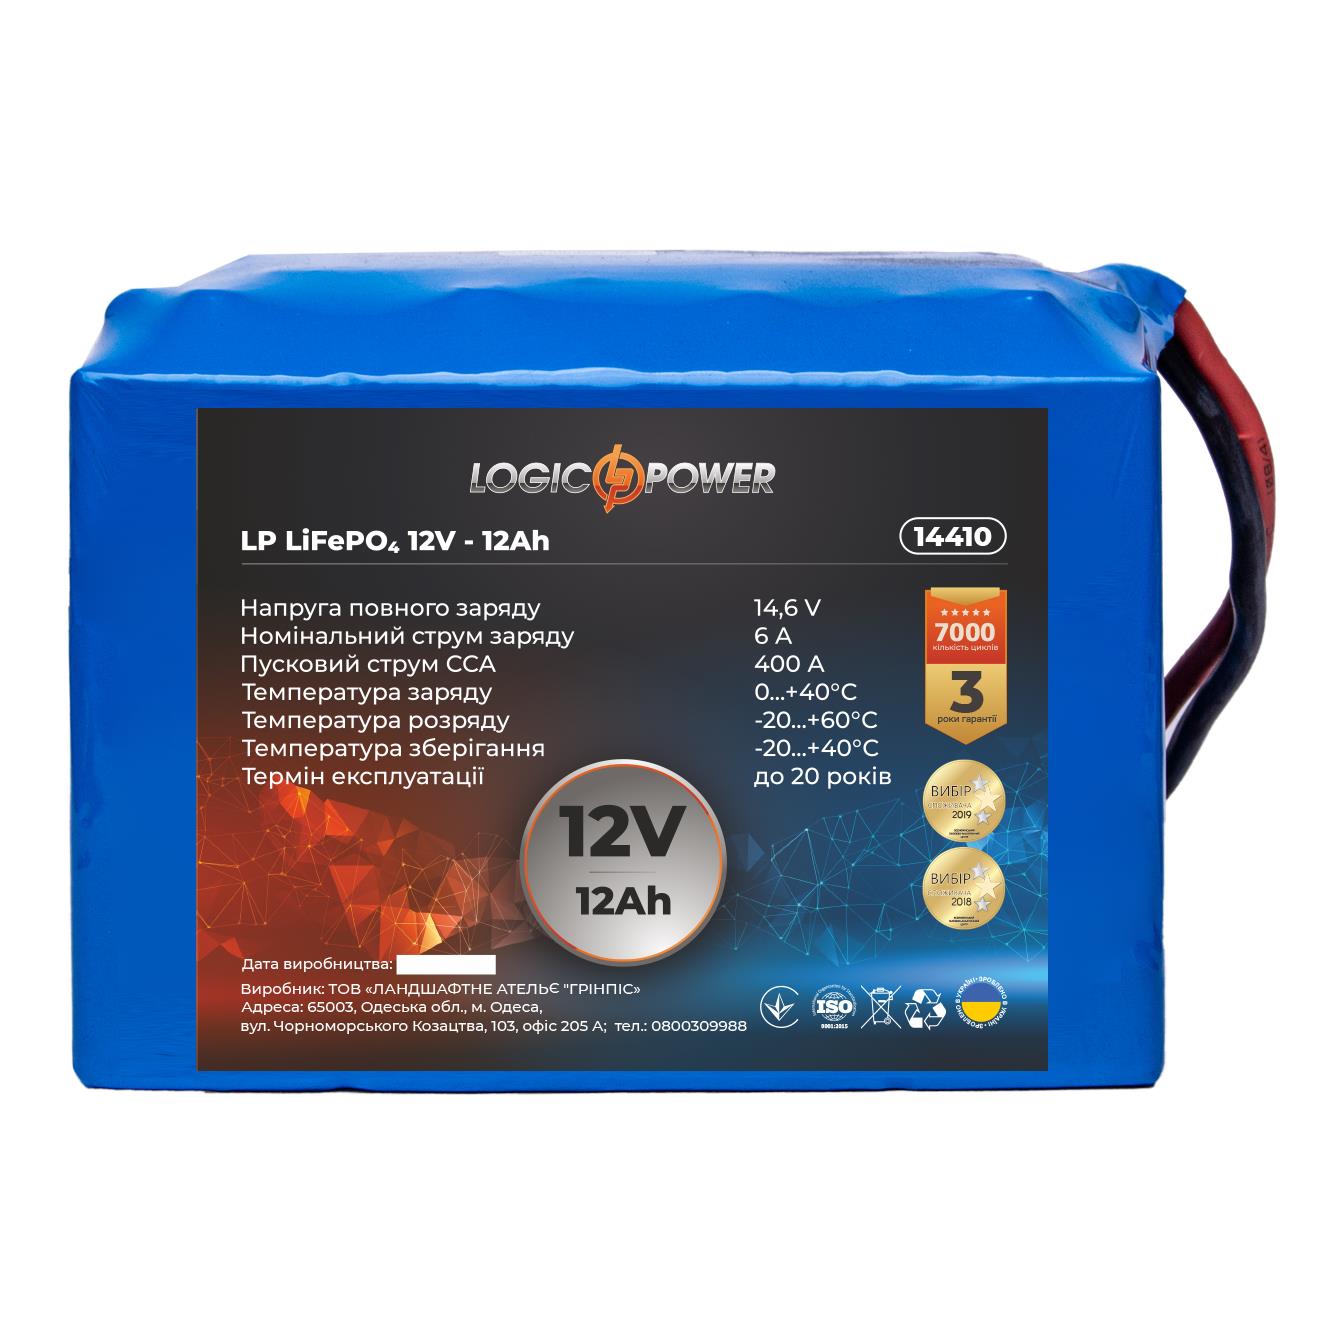 Аккумулятор 12 A·h LogicPower LP LiFePO4 12V - 12 Ah для мопеда (14410)